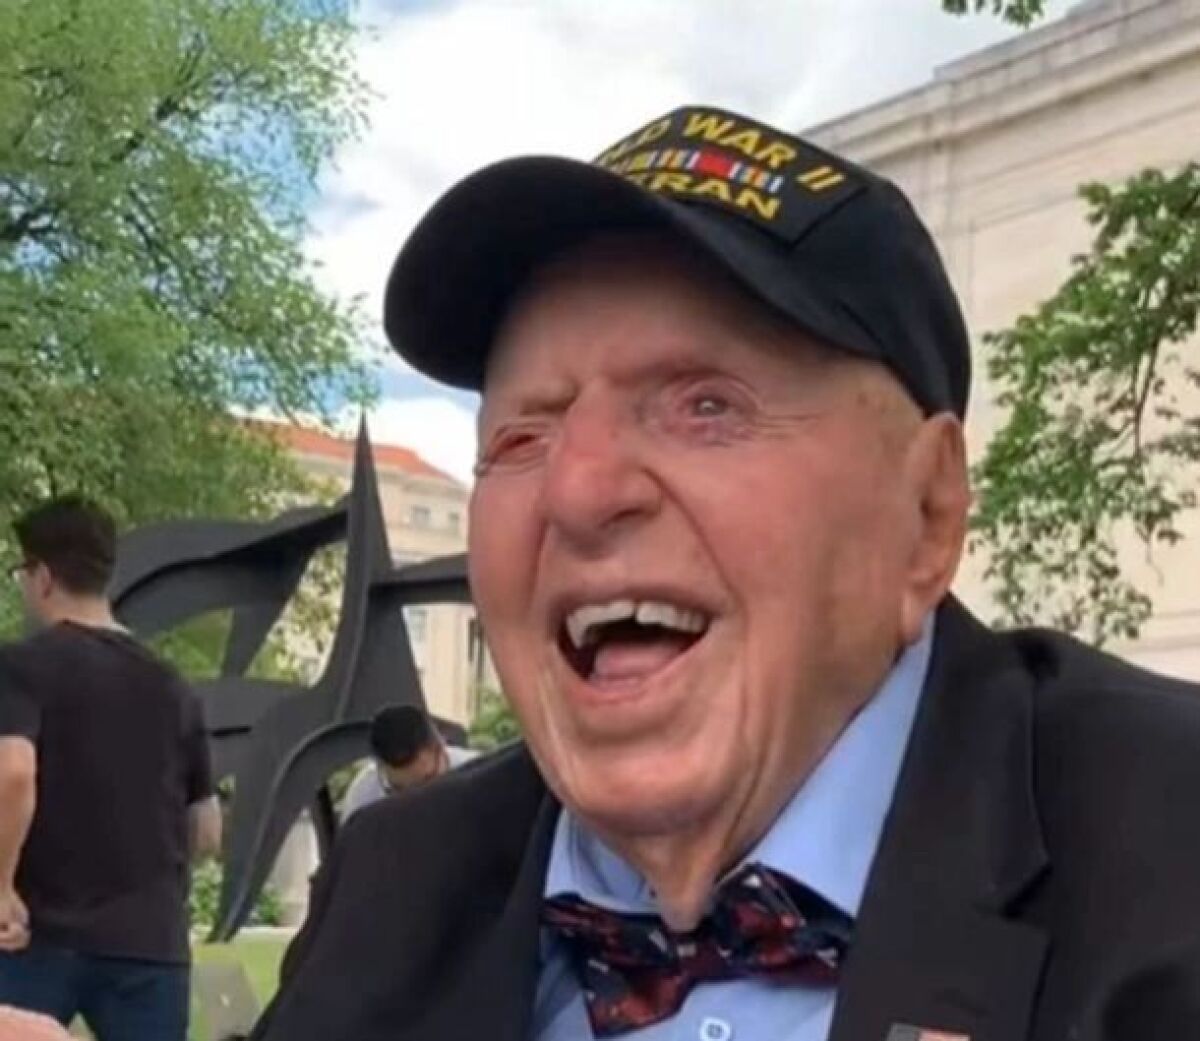 A closeup of Sidney Walton, who smiles and wears a baseball cap identifying him as a U.S. Army veteran of World War II.